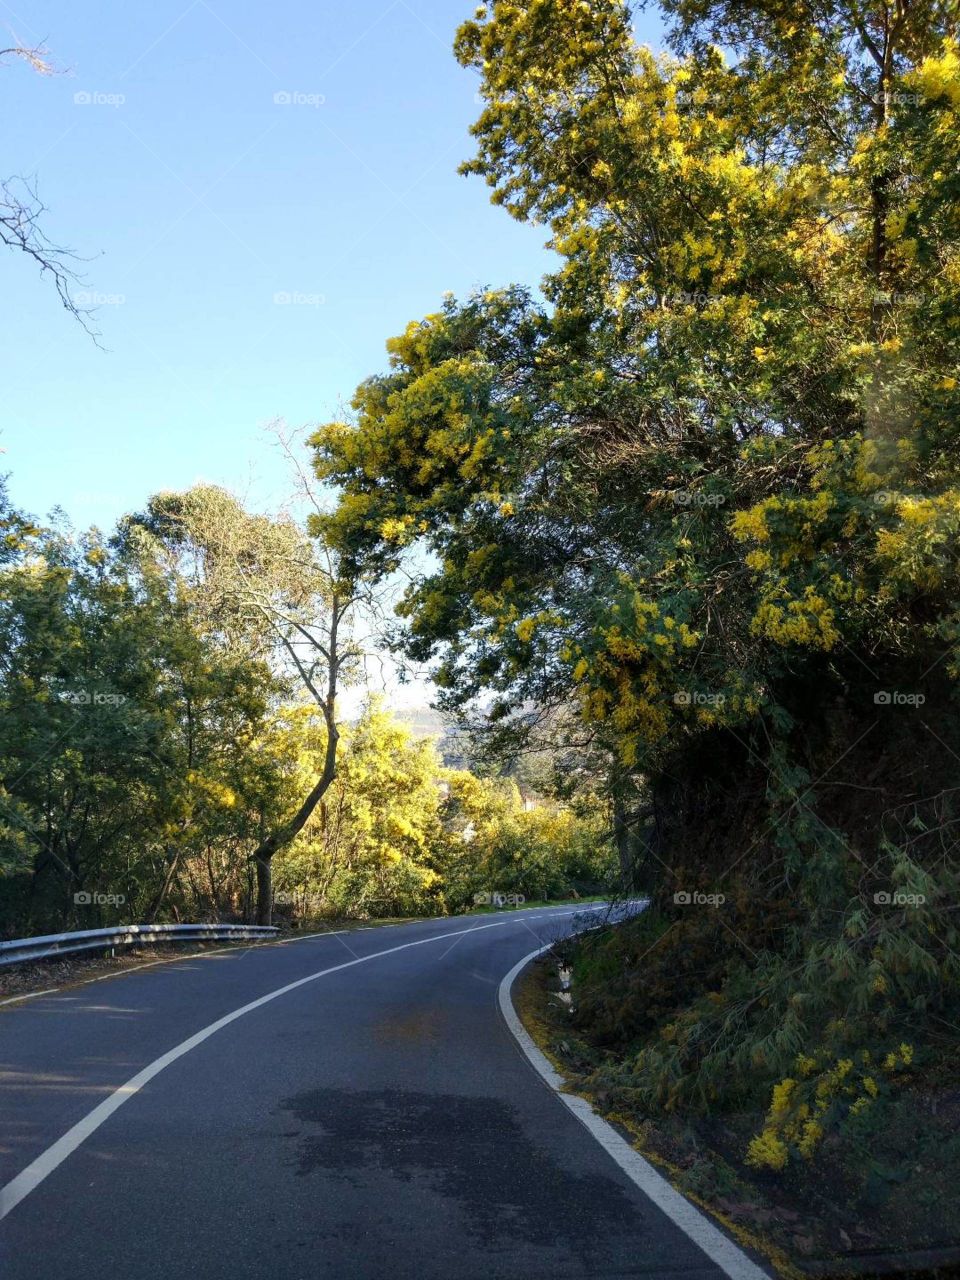 Road, Tree, No Person, Asphalt, Guidance